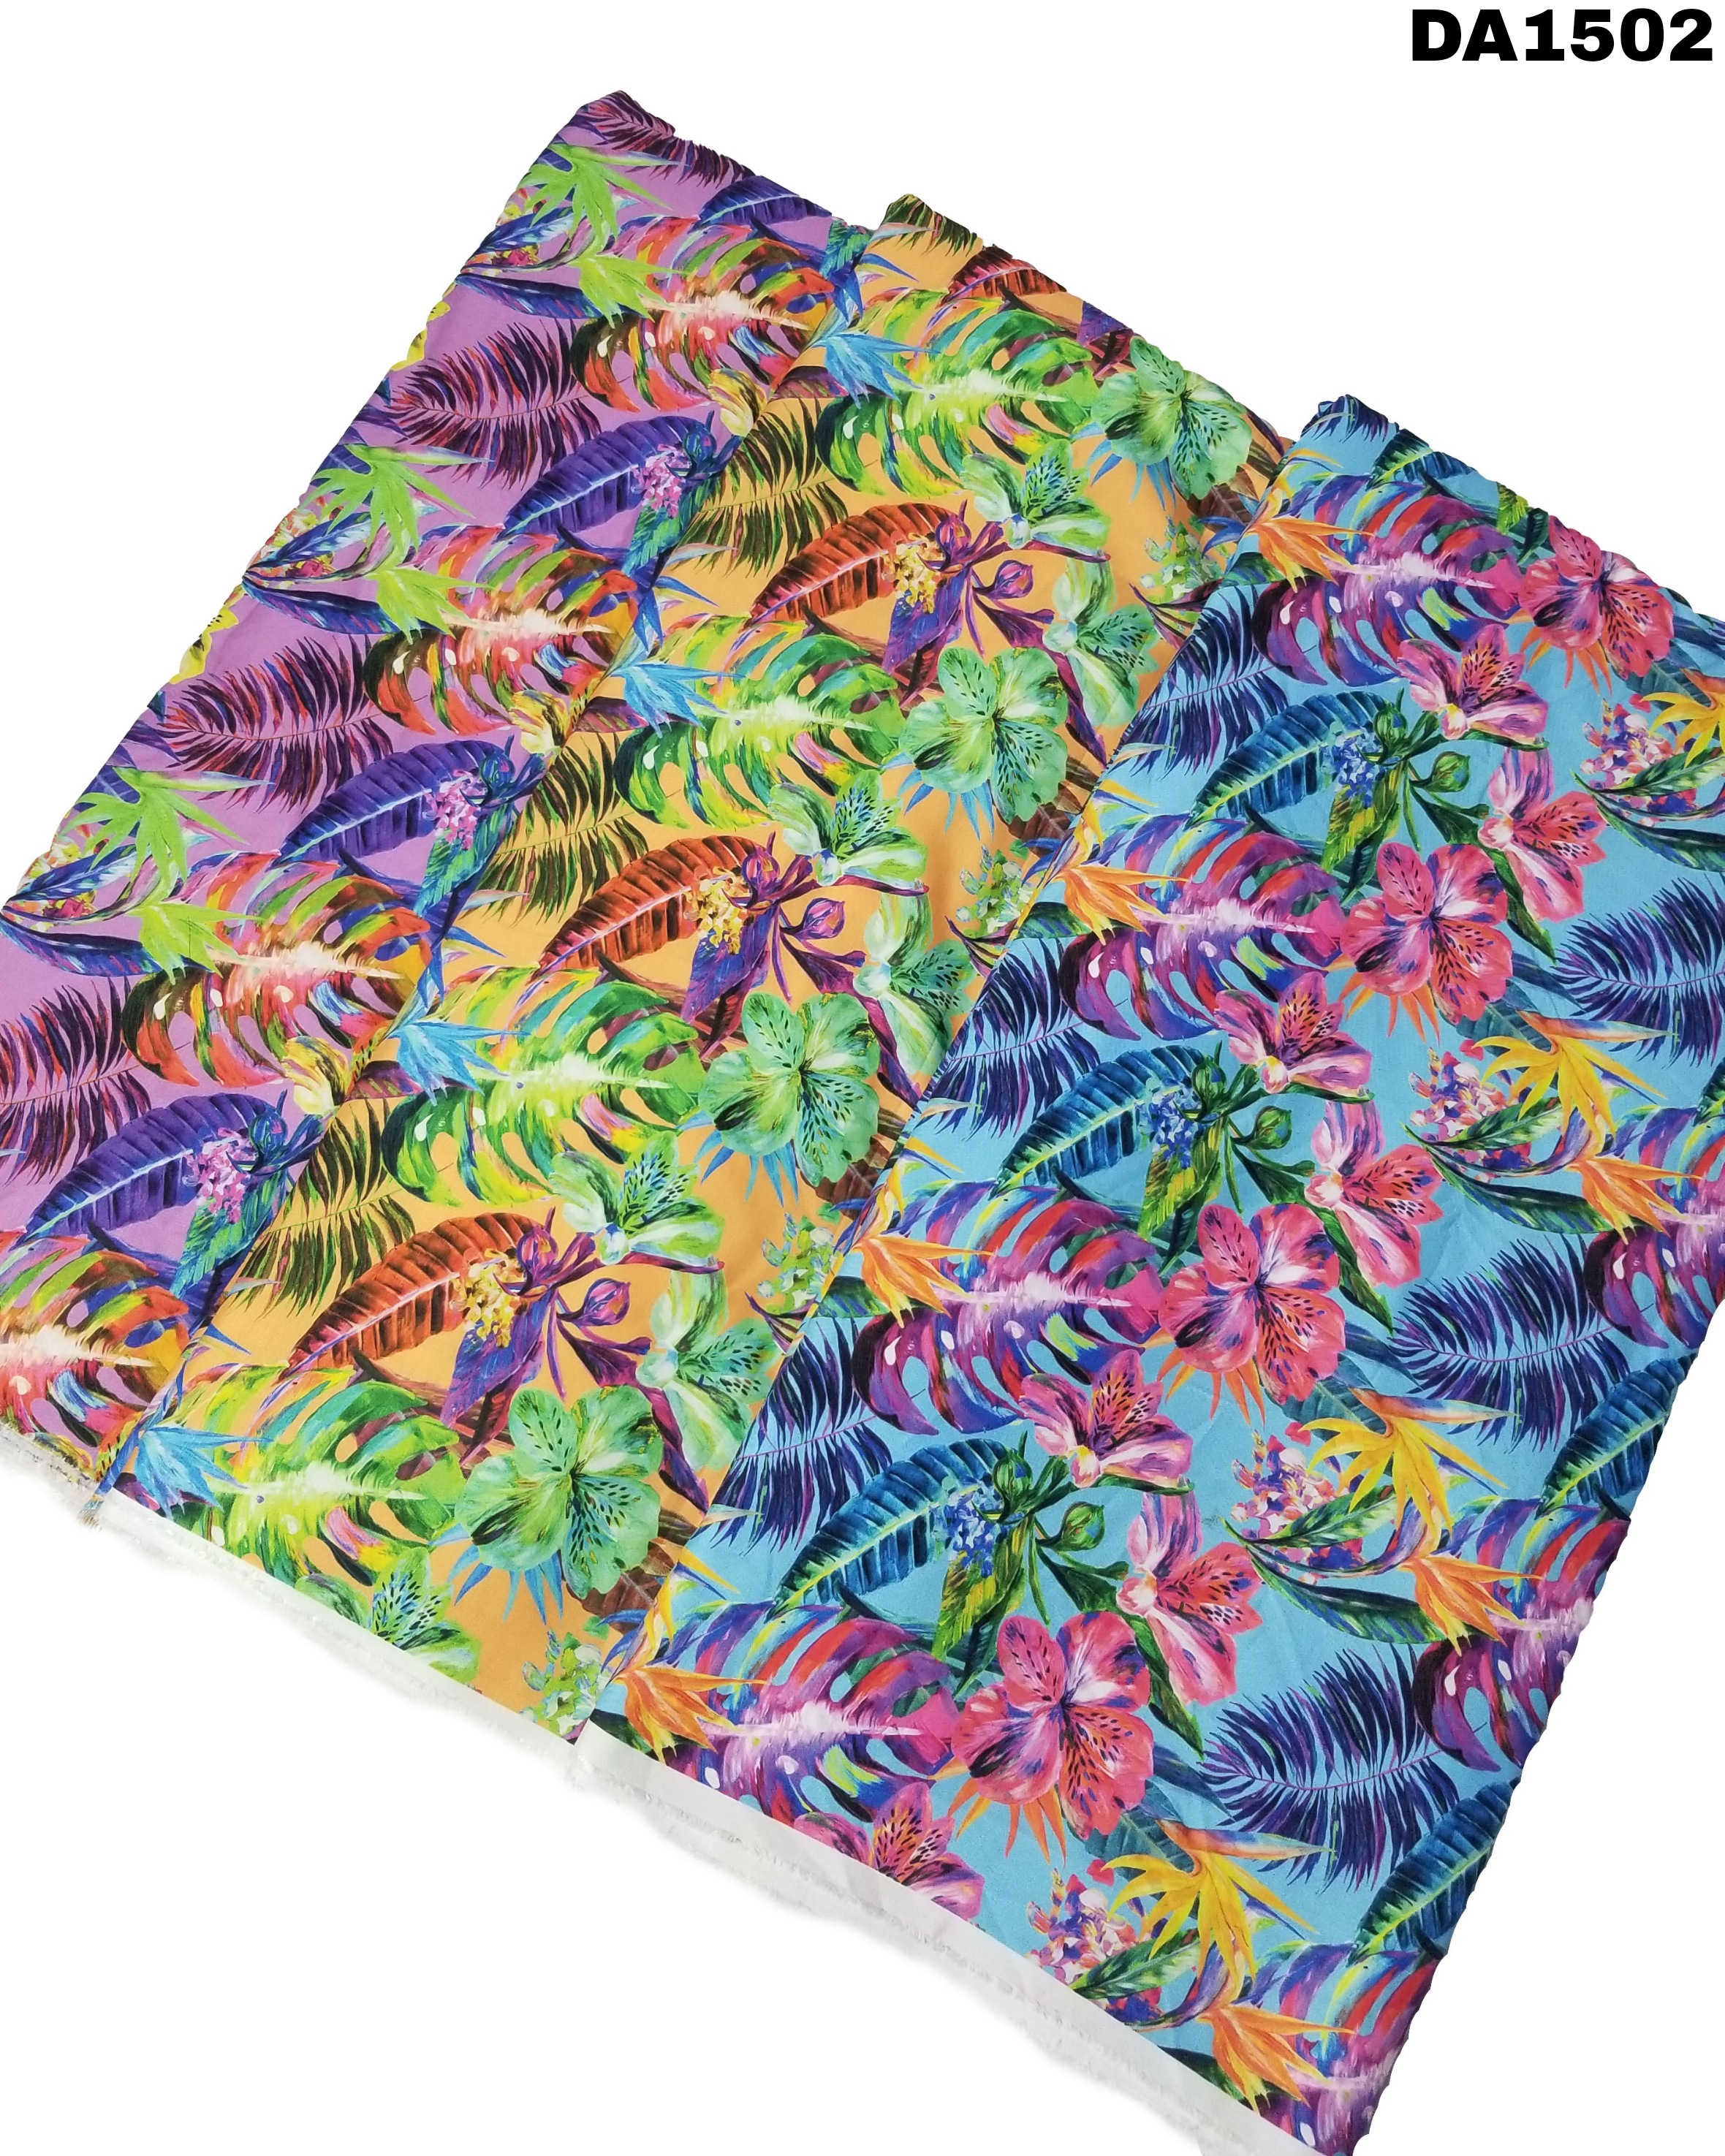 Colorful Digital Print Design on Rayon Slub Fabric